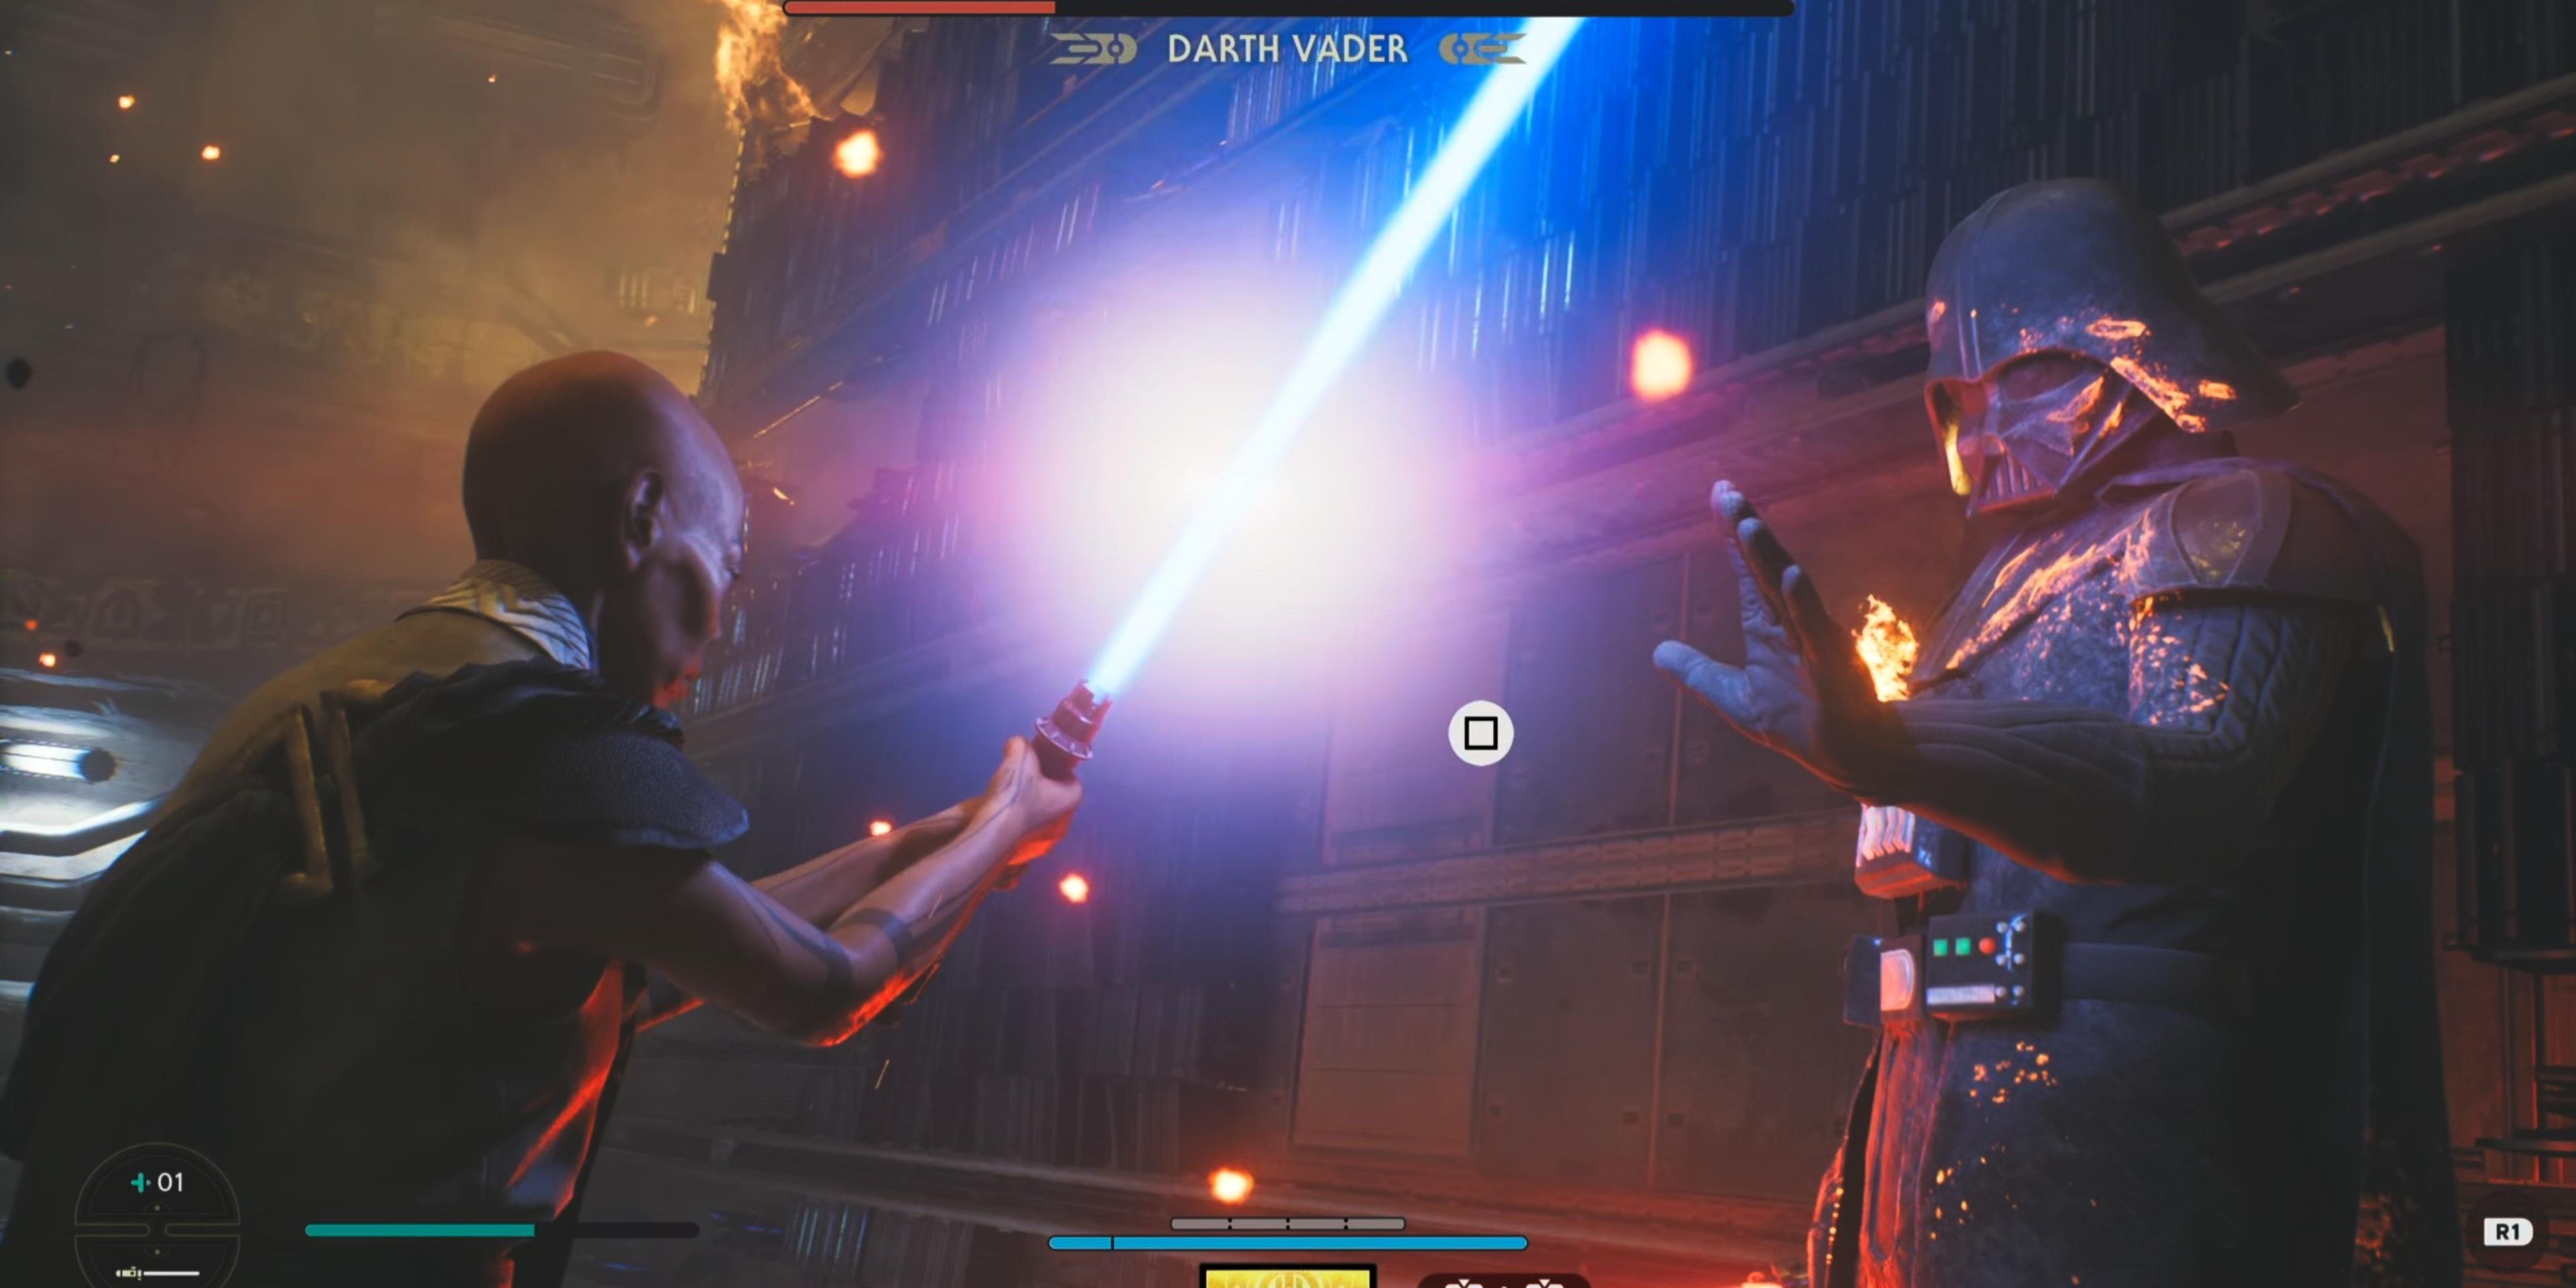 Vader using the Force to push back Cere QTE in Star Wars Jedi: Survivor